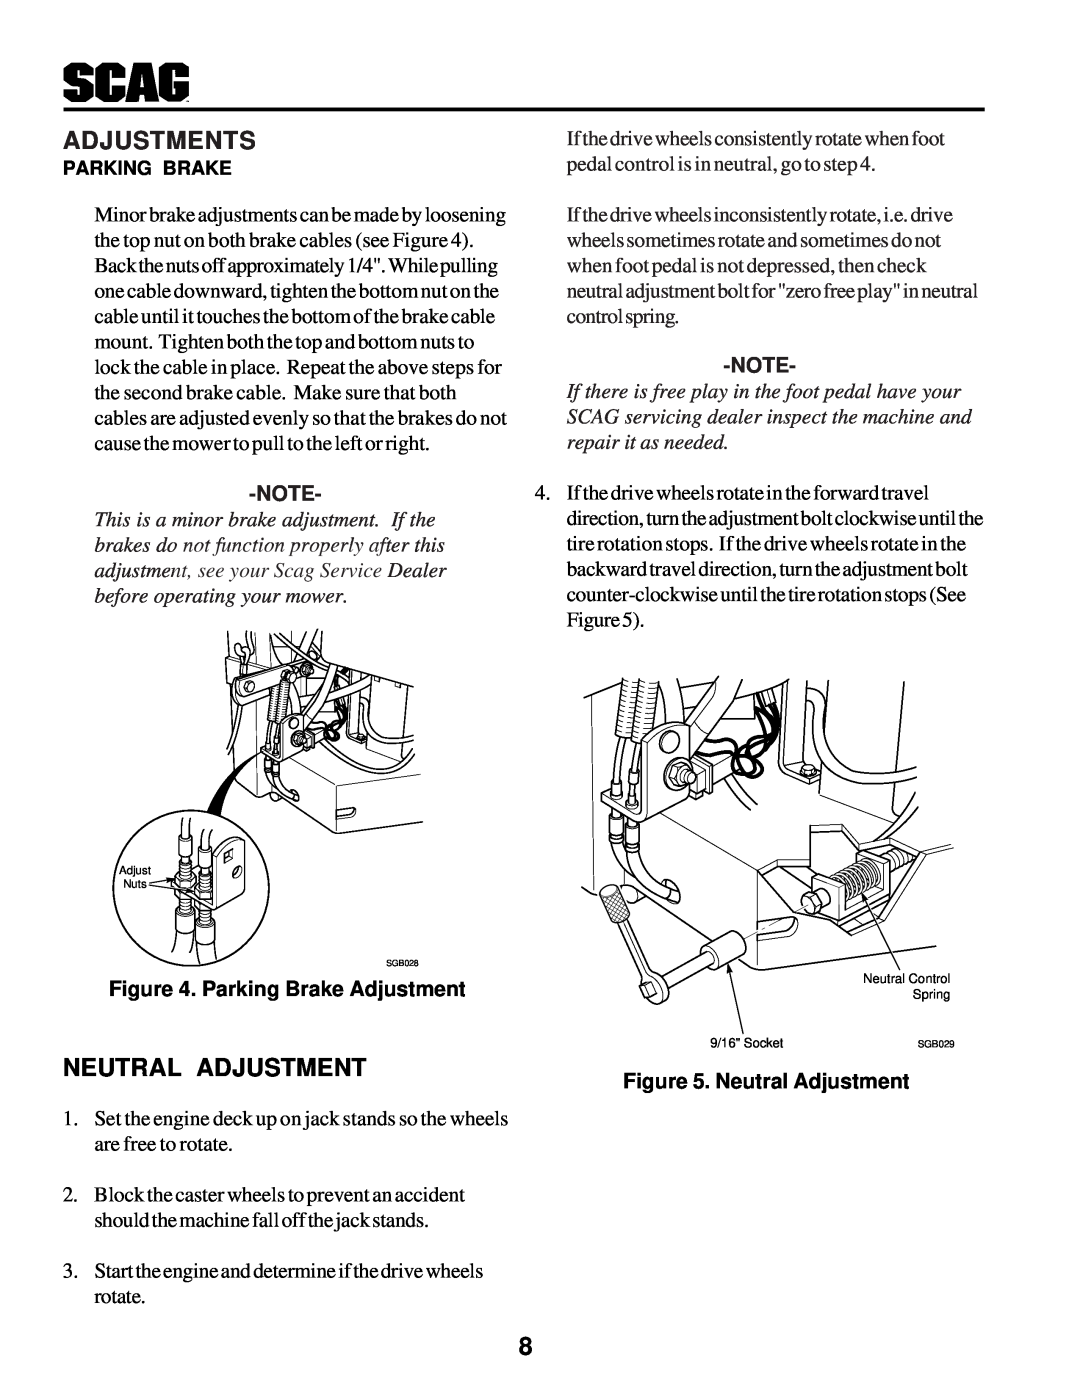 Scag Power Equipment STHM manual Neutral Adjustment, Adjustments, Parking Brake Adjustment 